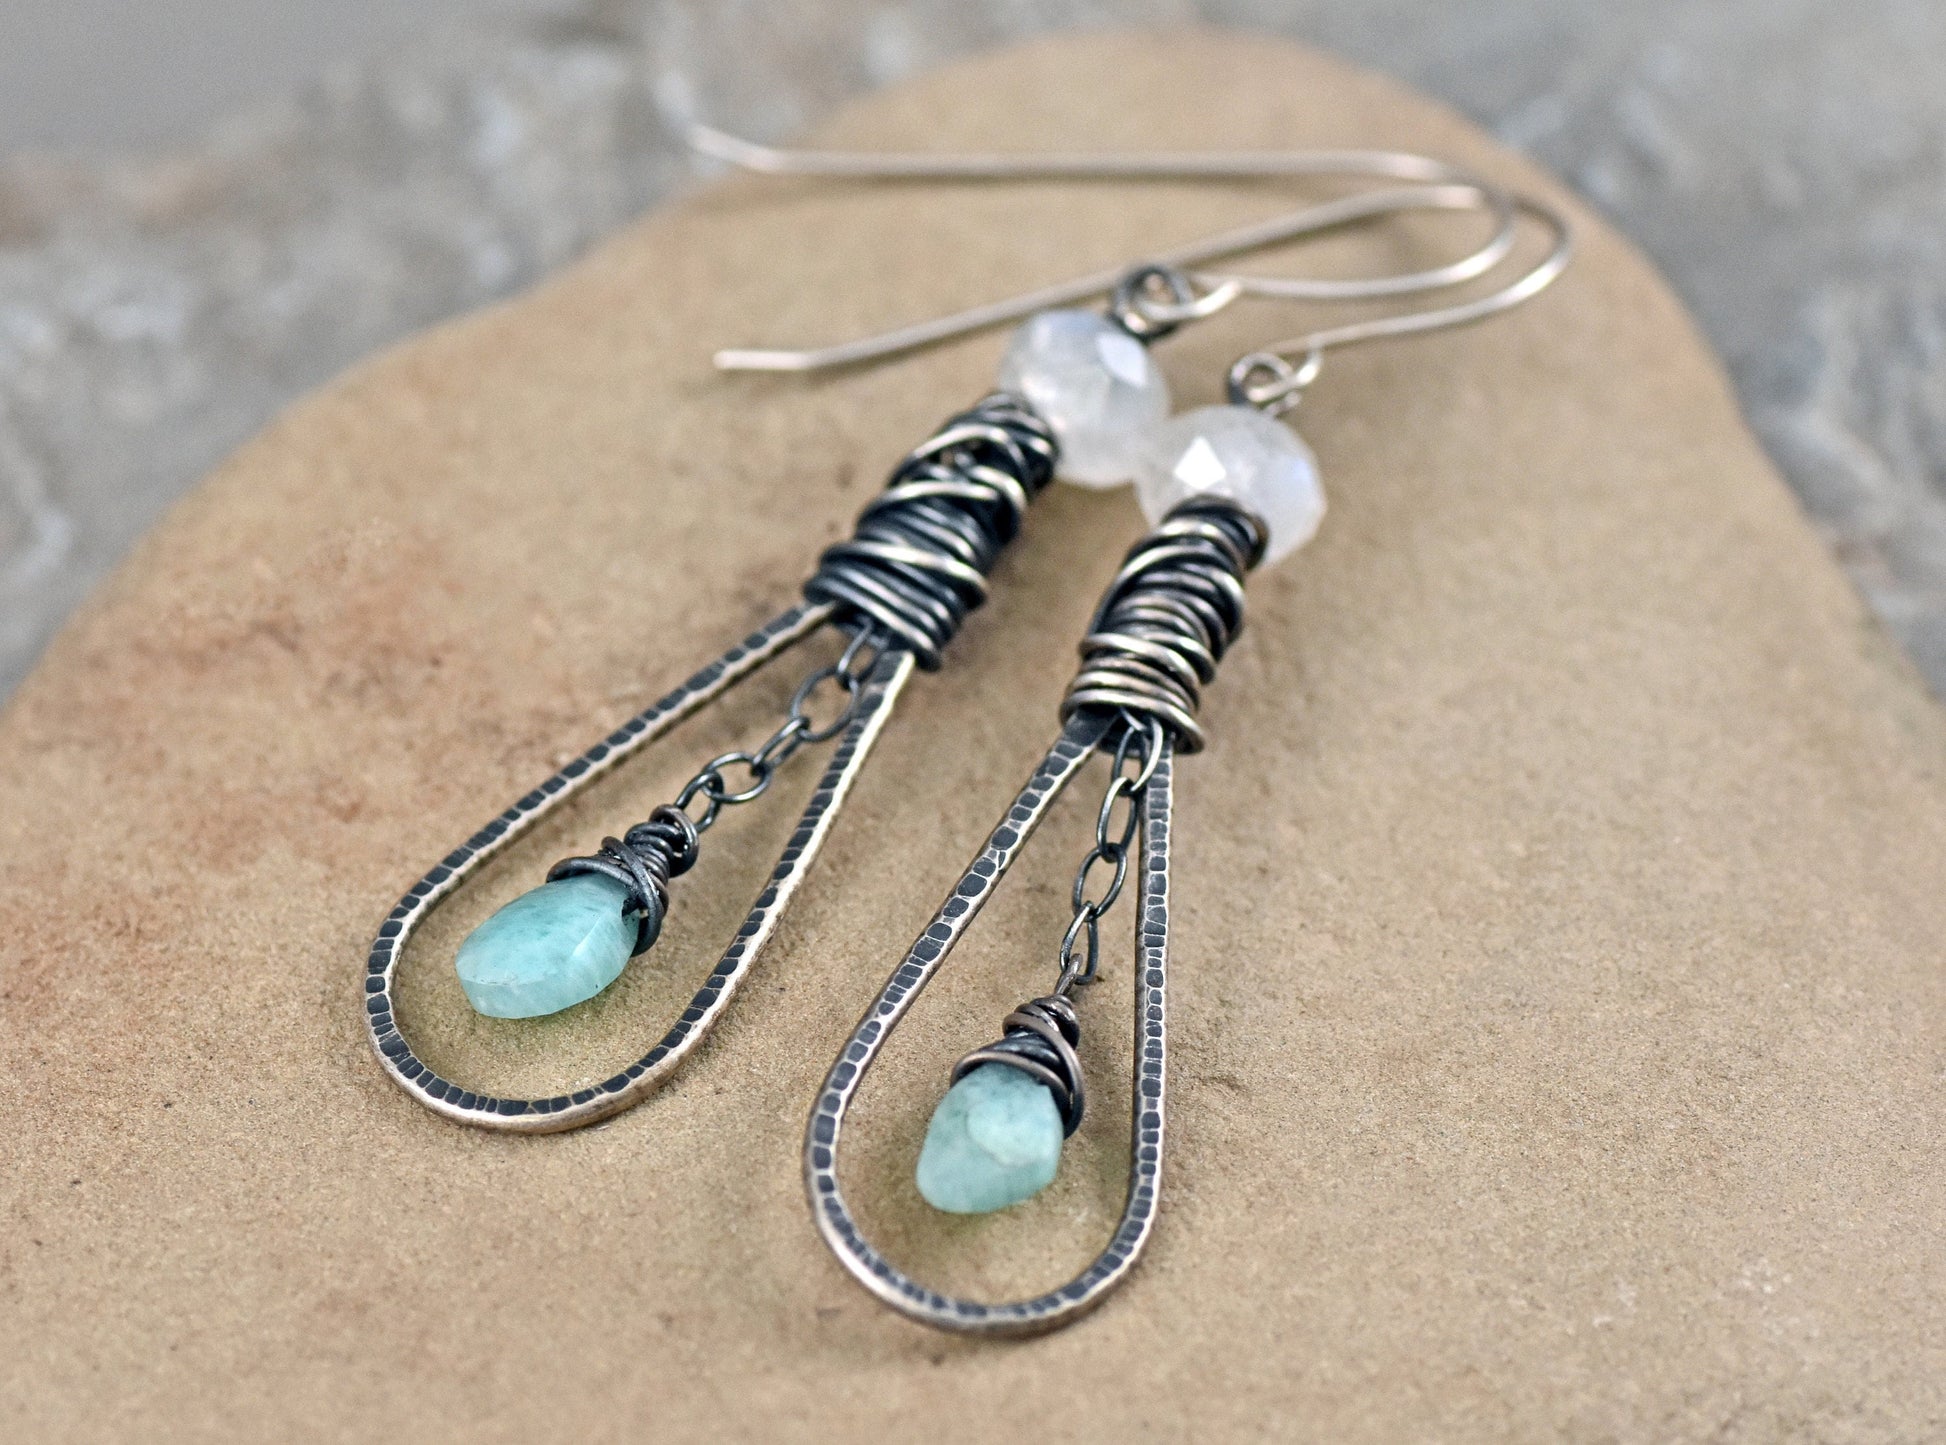 Moonstone Amazonite Sterling Silver Earrings, Light Blue White Gemstone Dangles, Rustic Artisan Wire Teardrop Jewelry Handmade